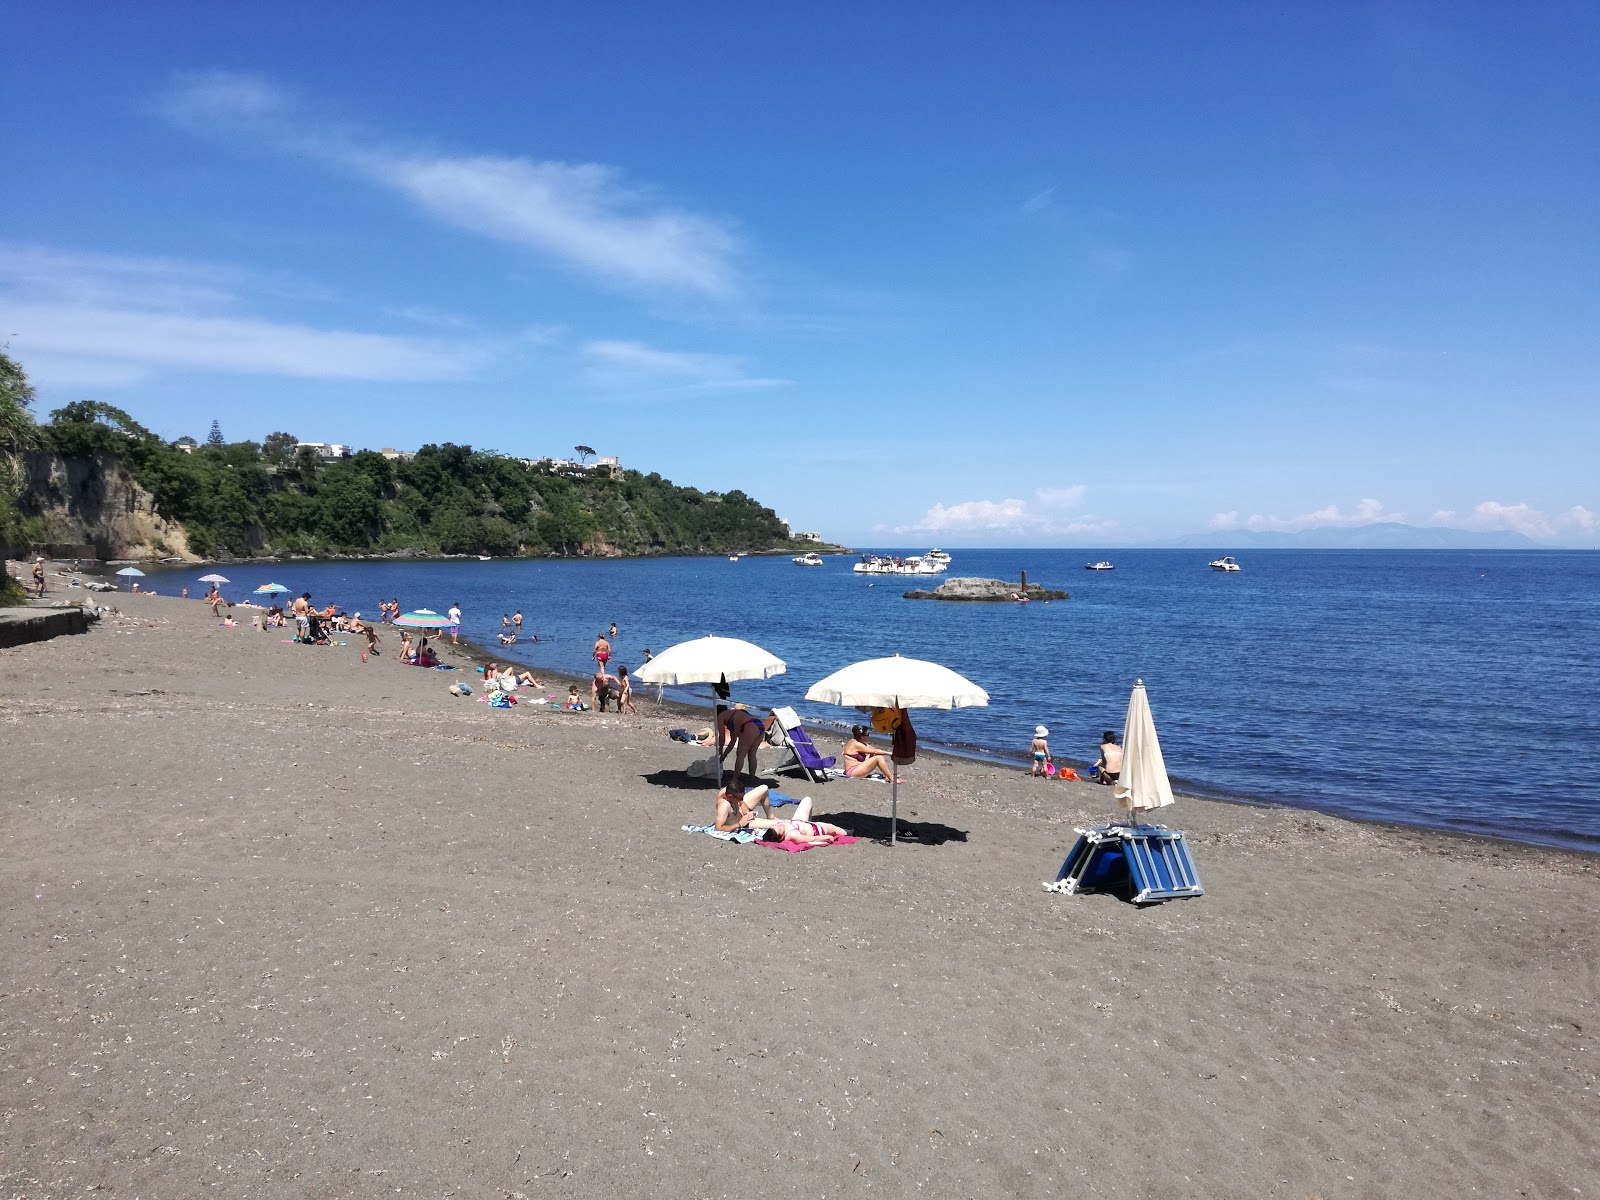 Foto av Spiaggia di Silurenza med grå fin sten yta